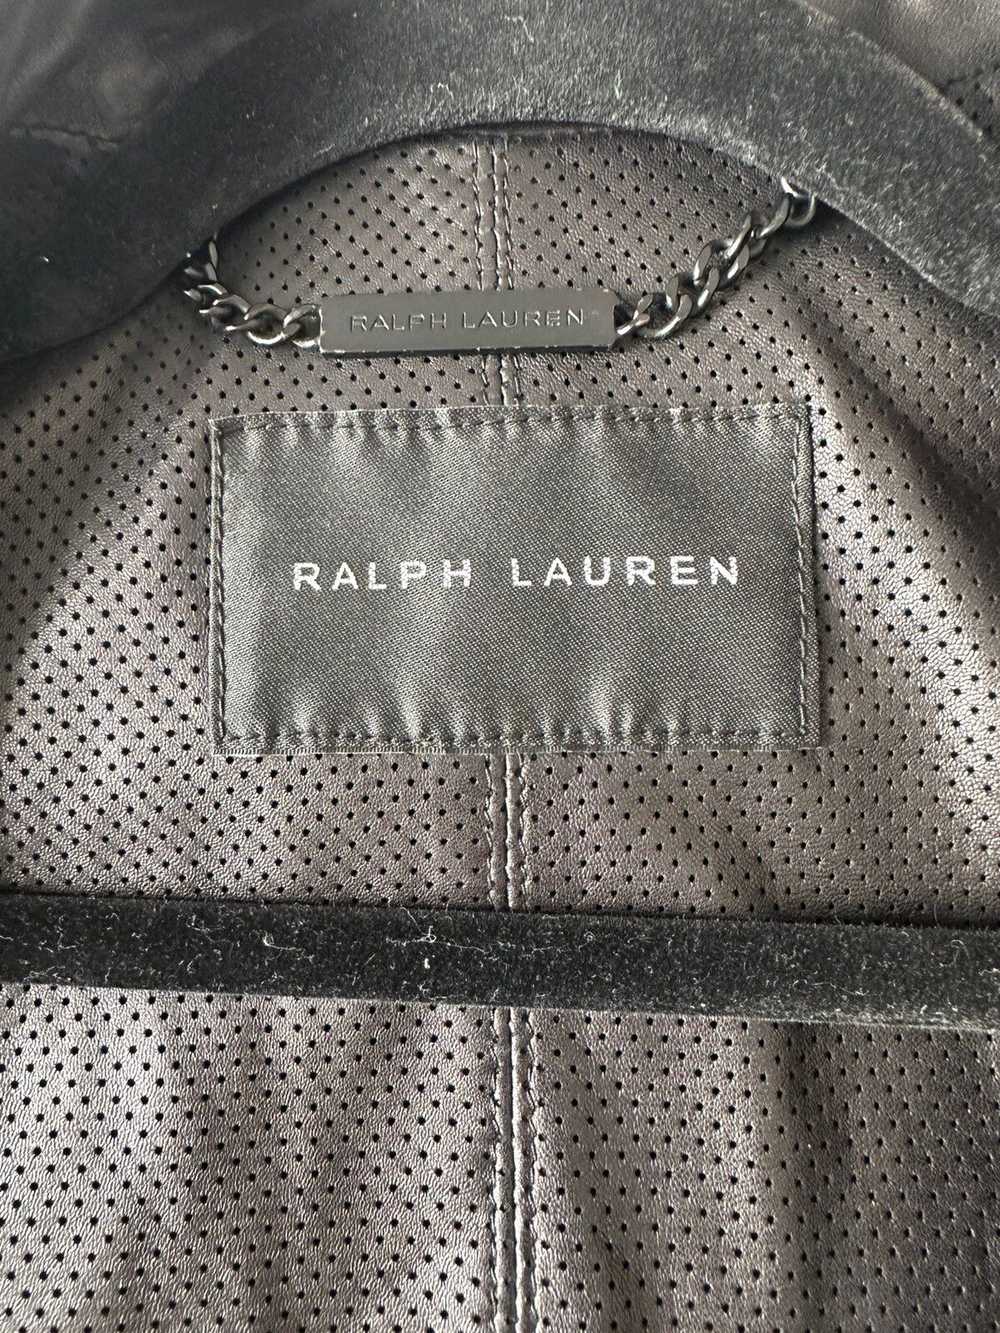 Ralph Lauren Black Label Black Moto Leather Jacket - image 4